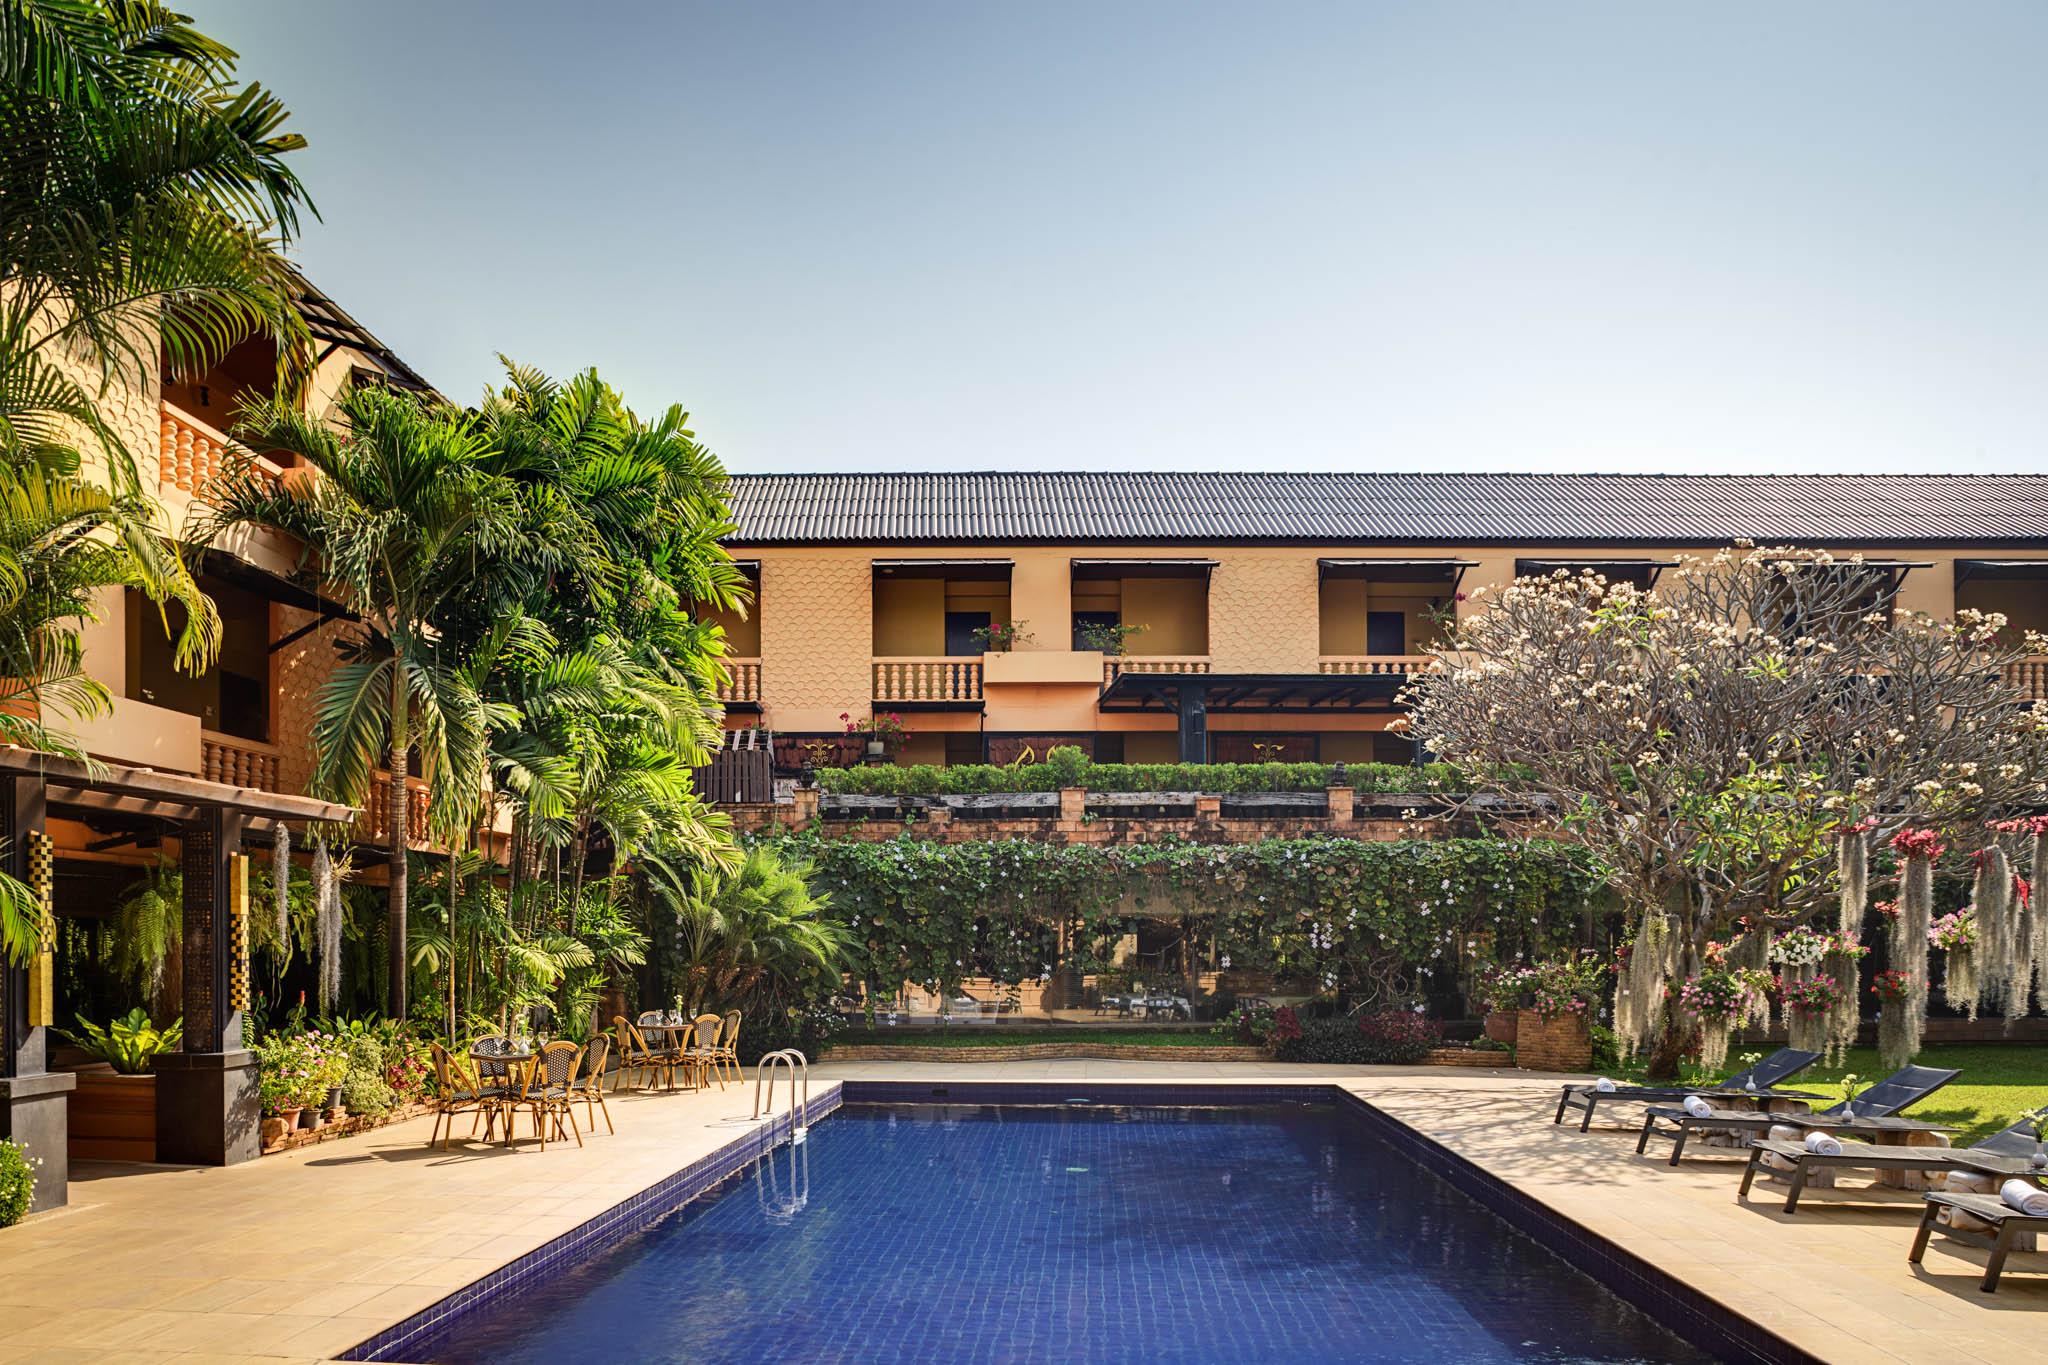 Holiday Garden Hotel & Resort | Swimming pool in the garden resort